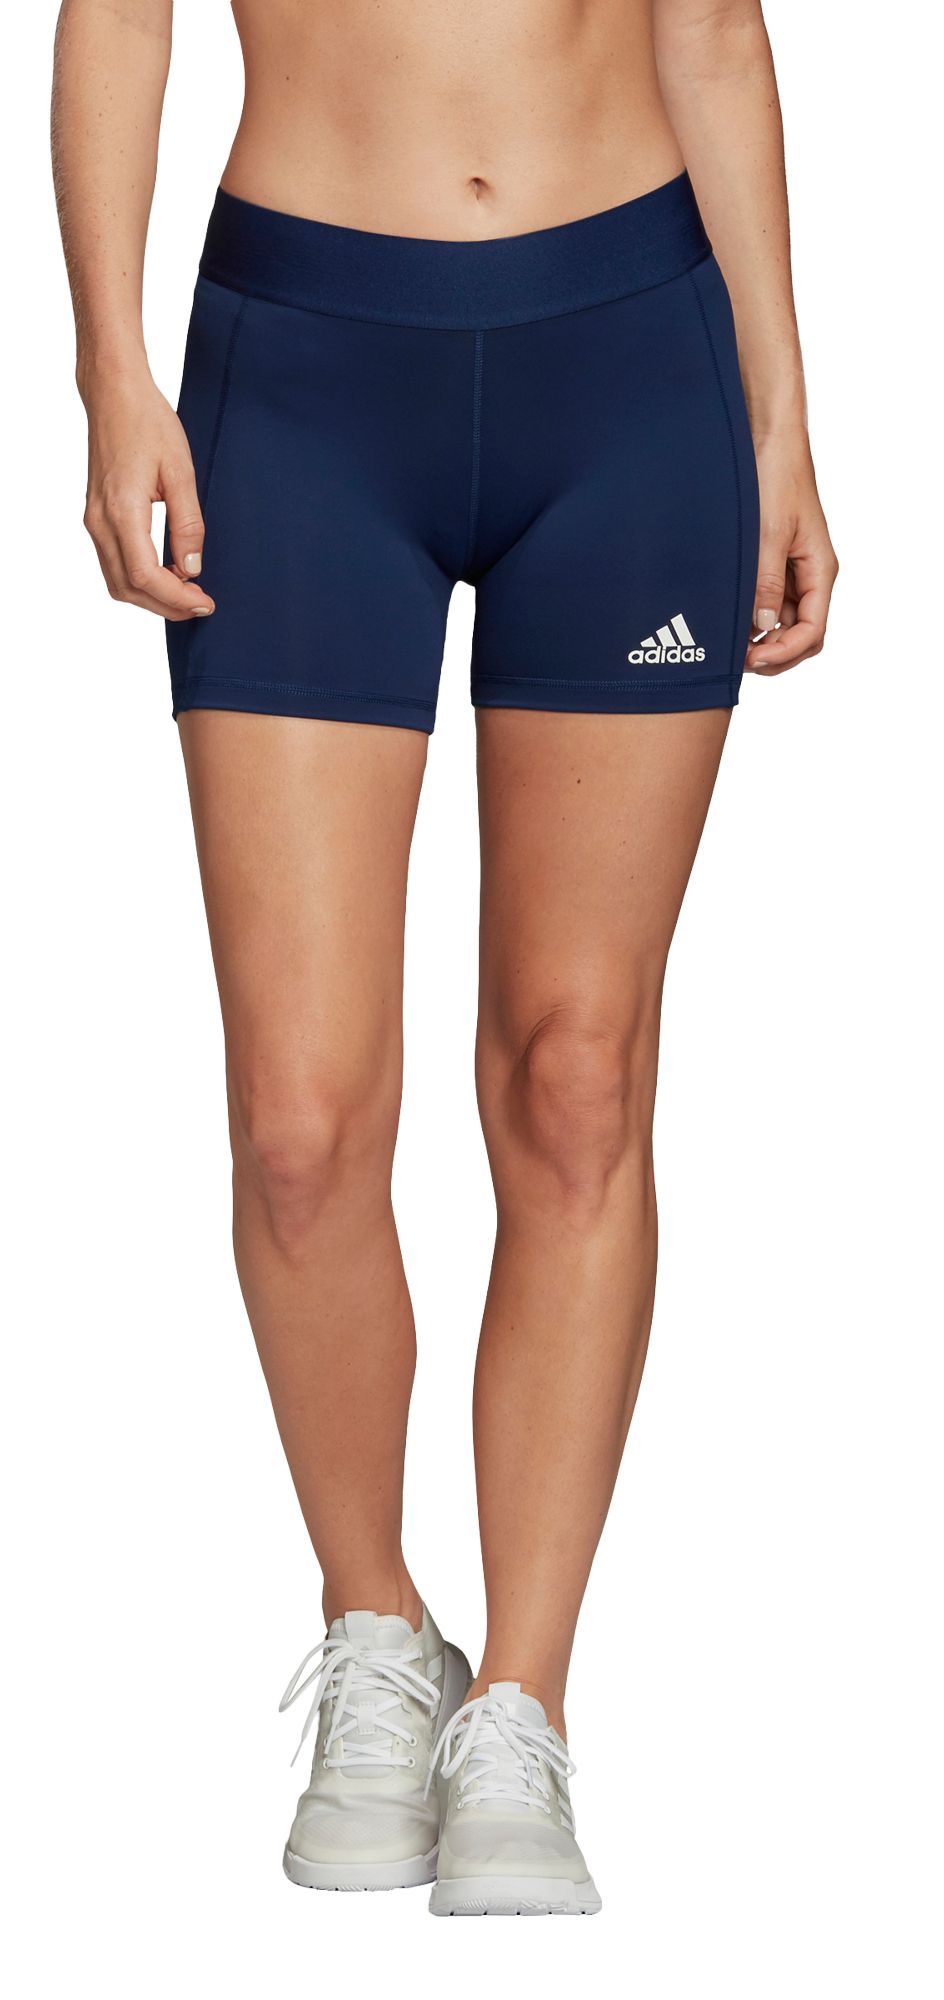 adidas womens volleyball shorts